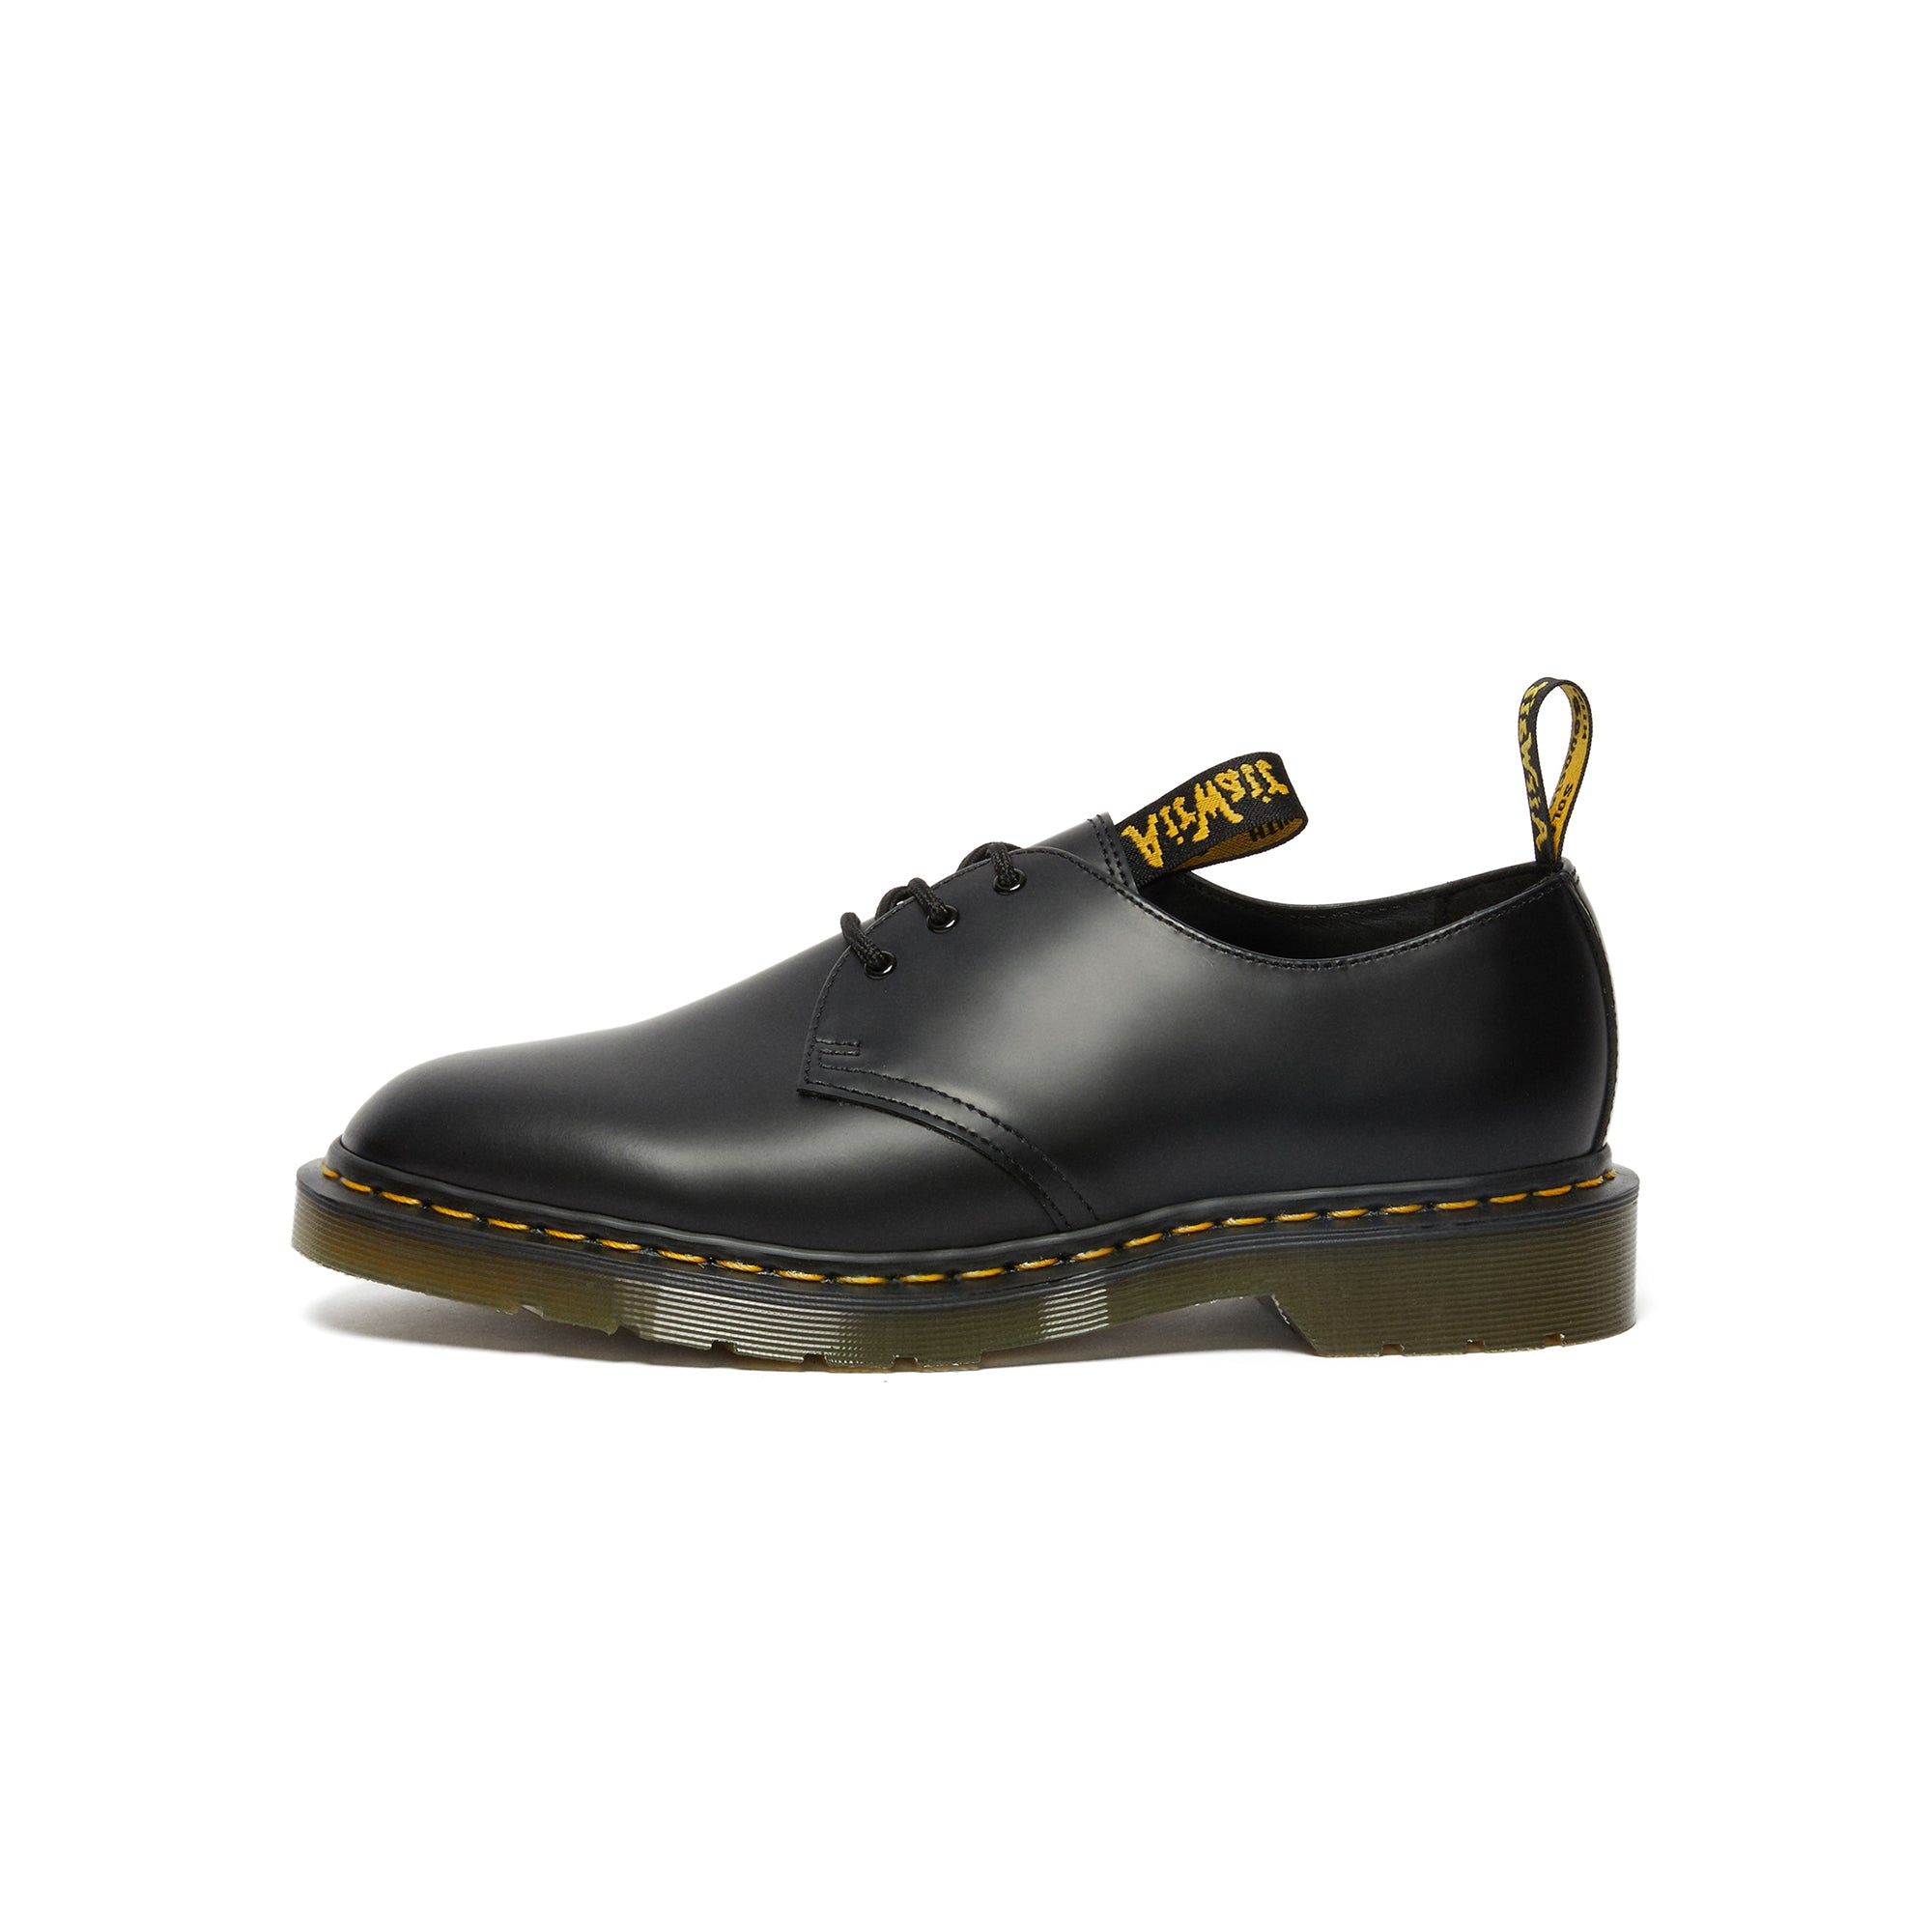 Dr. Martens Boots, Oxfords, & Sandals